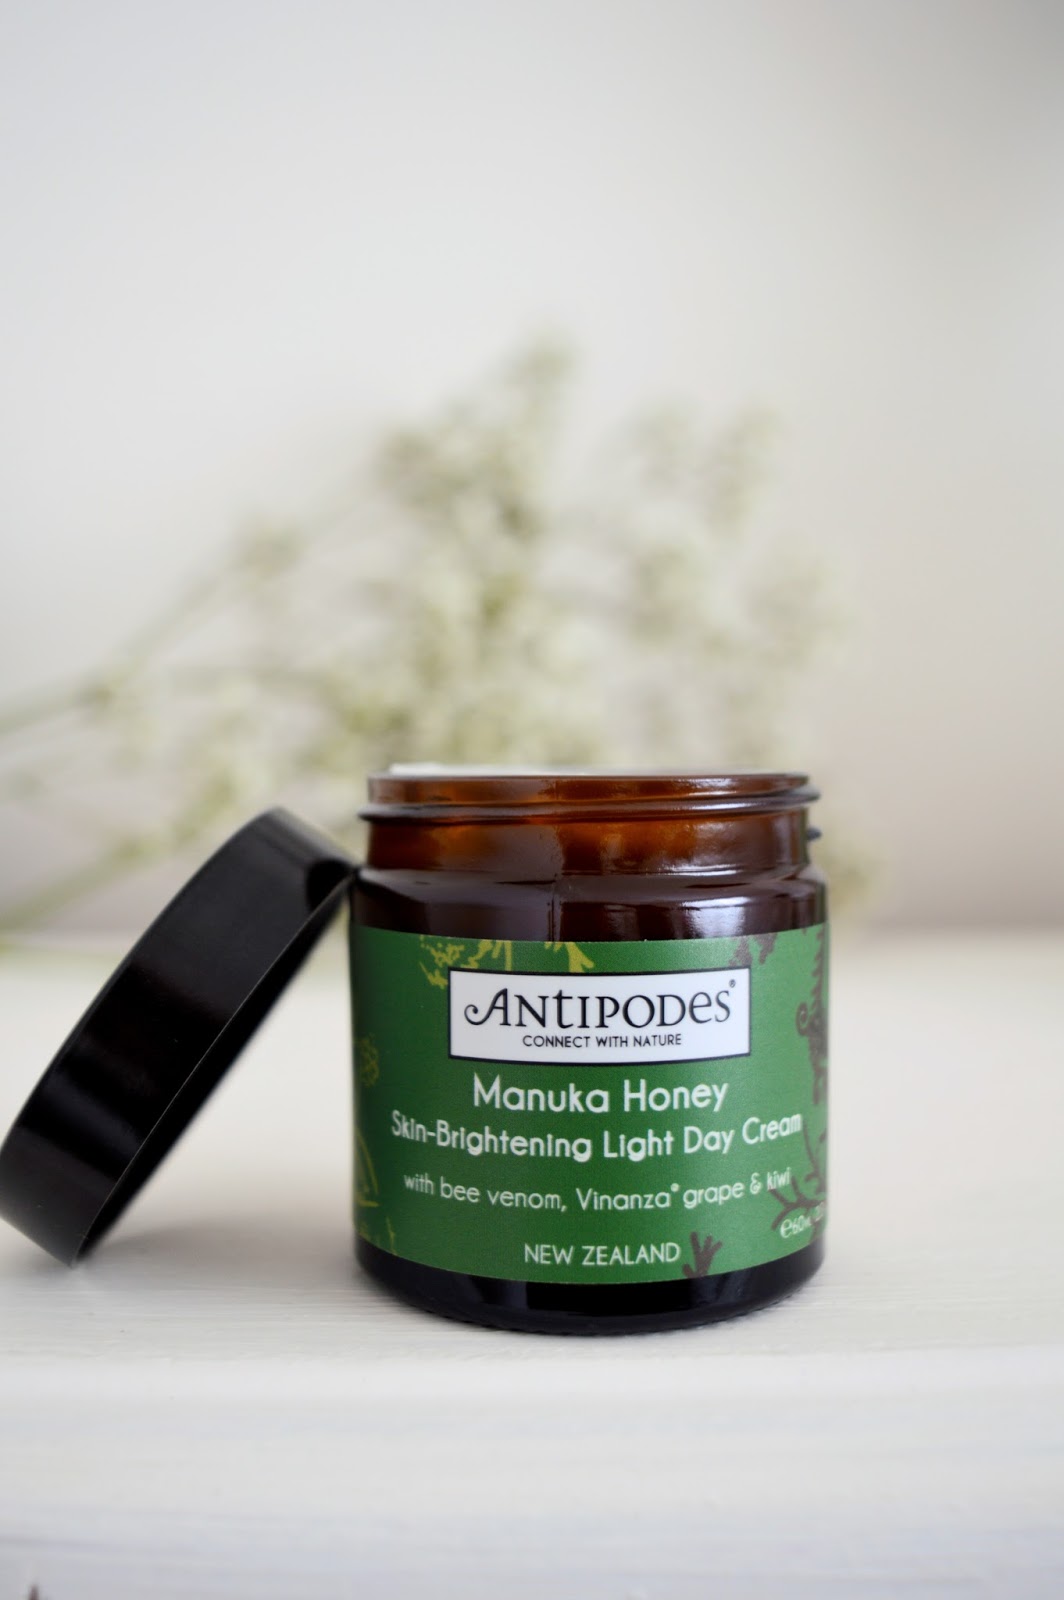 Antipodes Manuka Honey Skin Brightening Day Cream review, UK beauty blog